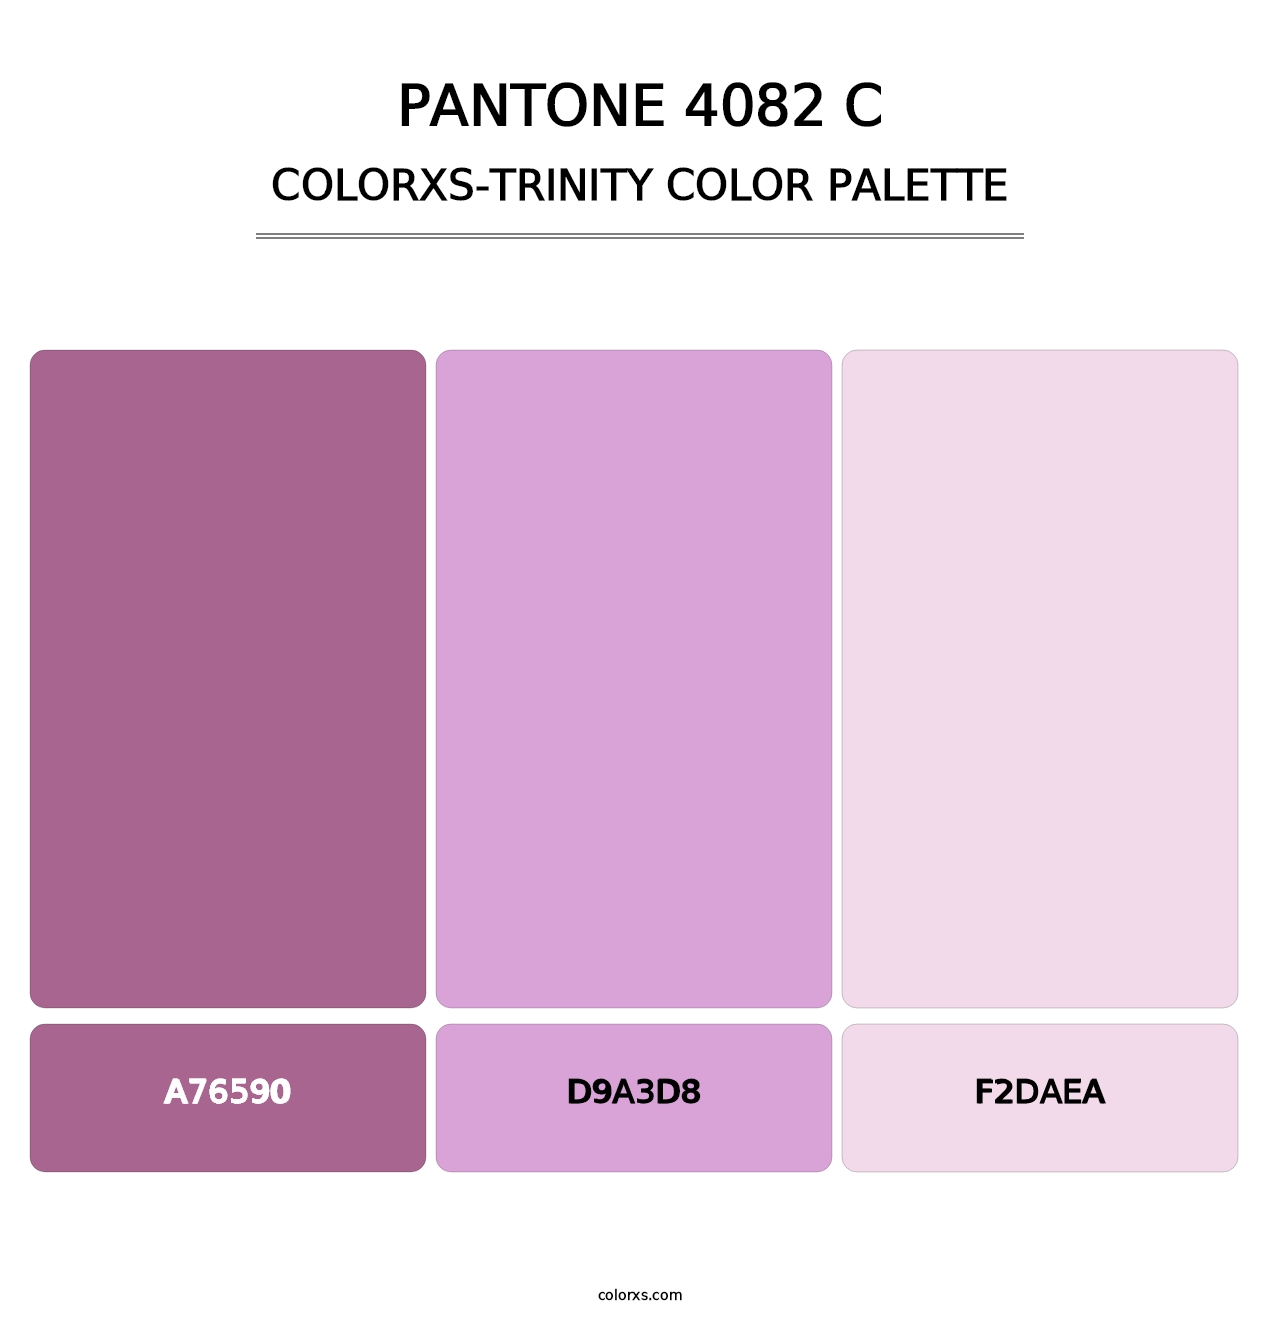 PANTONE 4082 C - Colorxs Trinity Palette